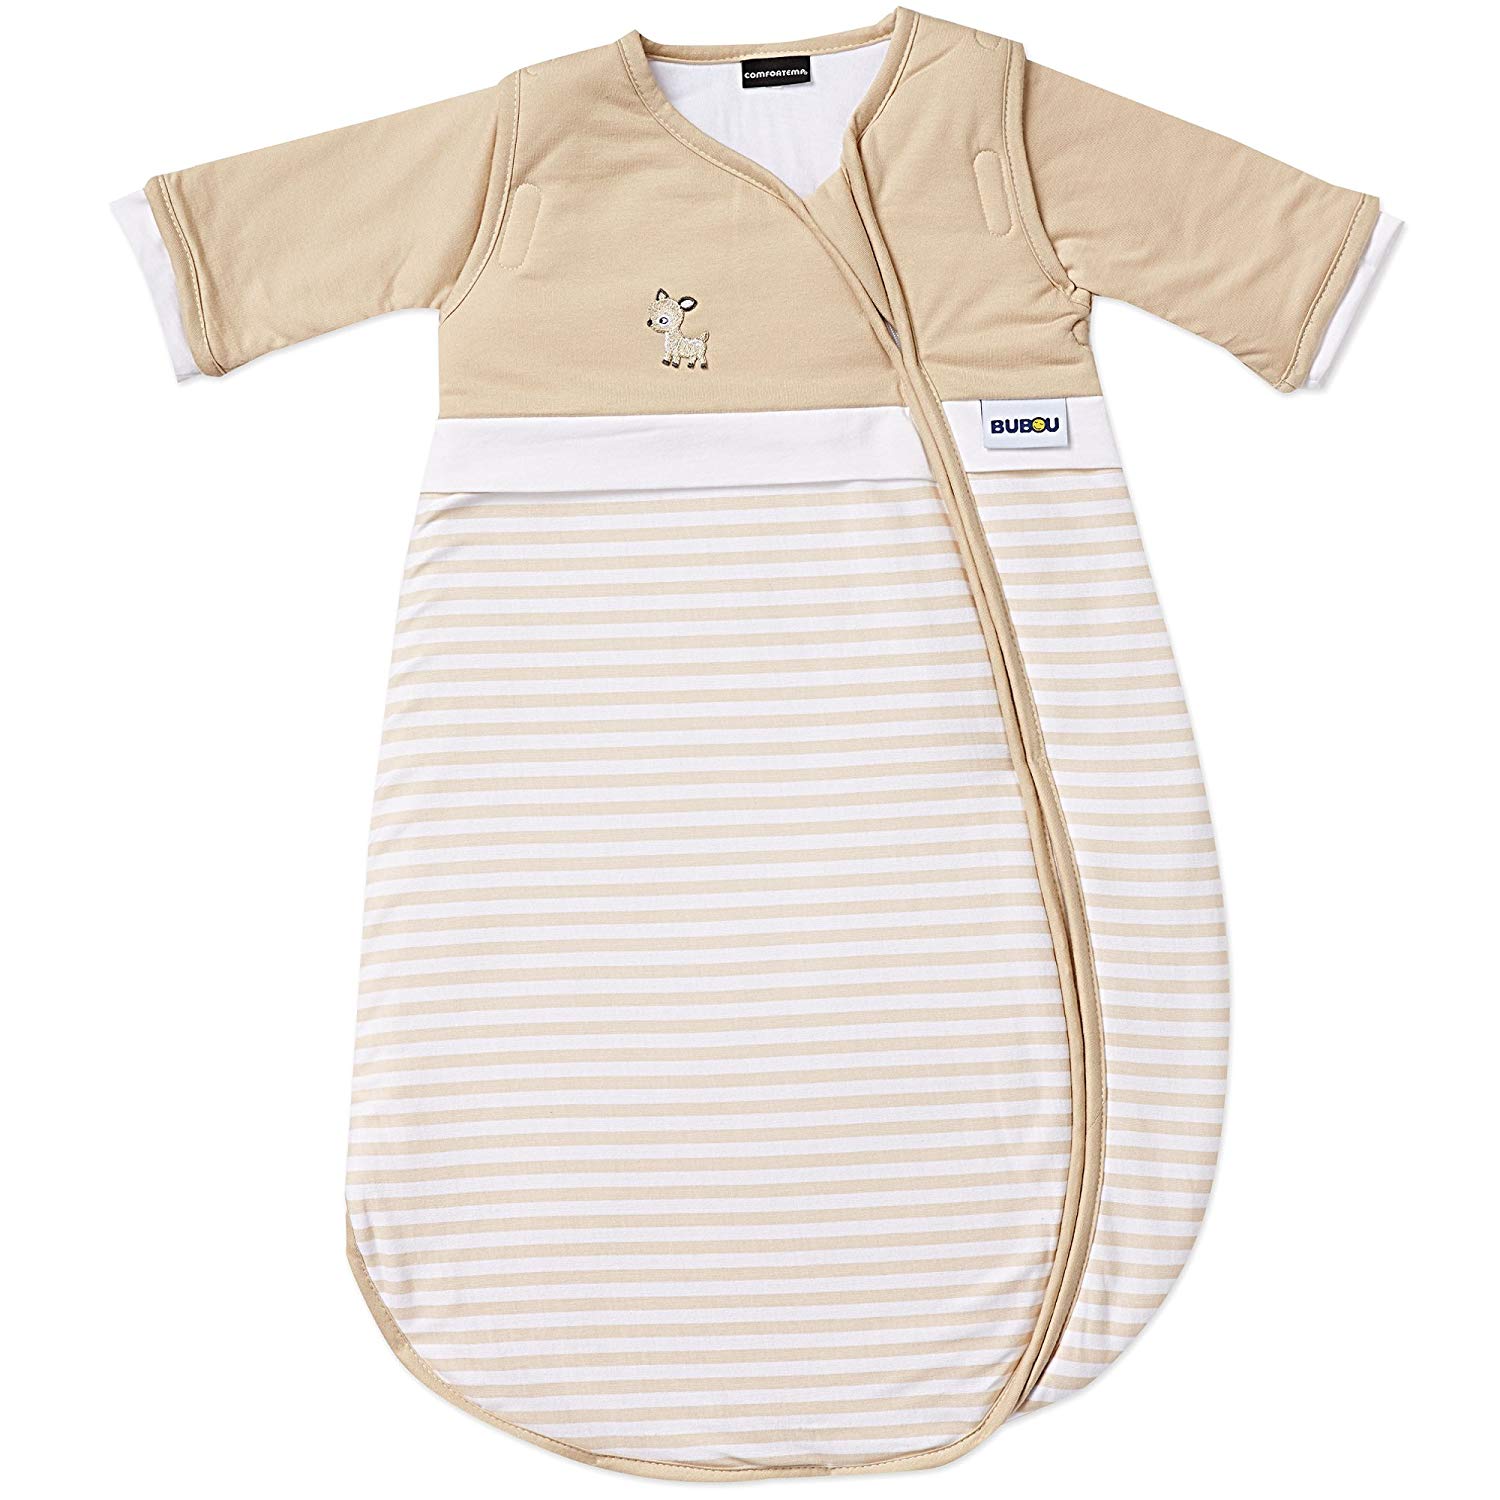 Gesslein 771099 Stripe Bubou sleeping bag size 70, multi-coloured)